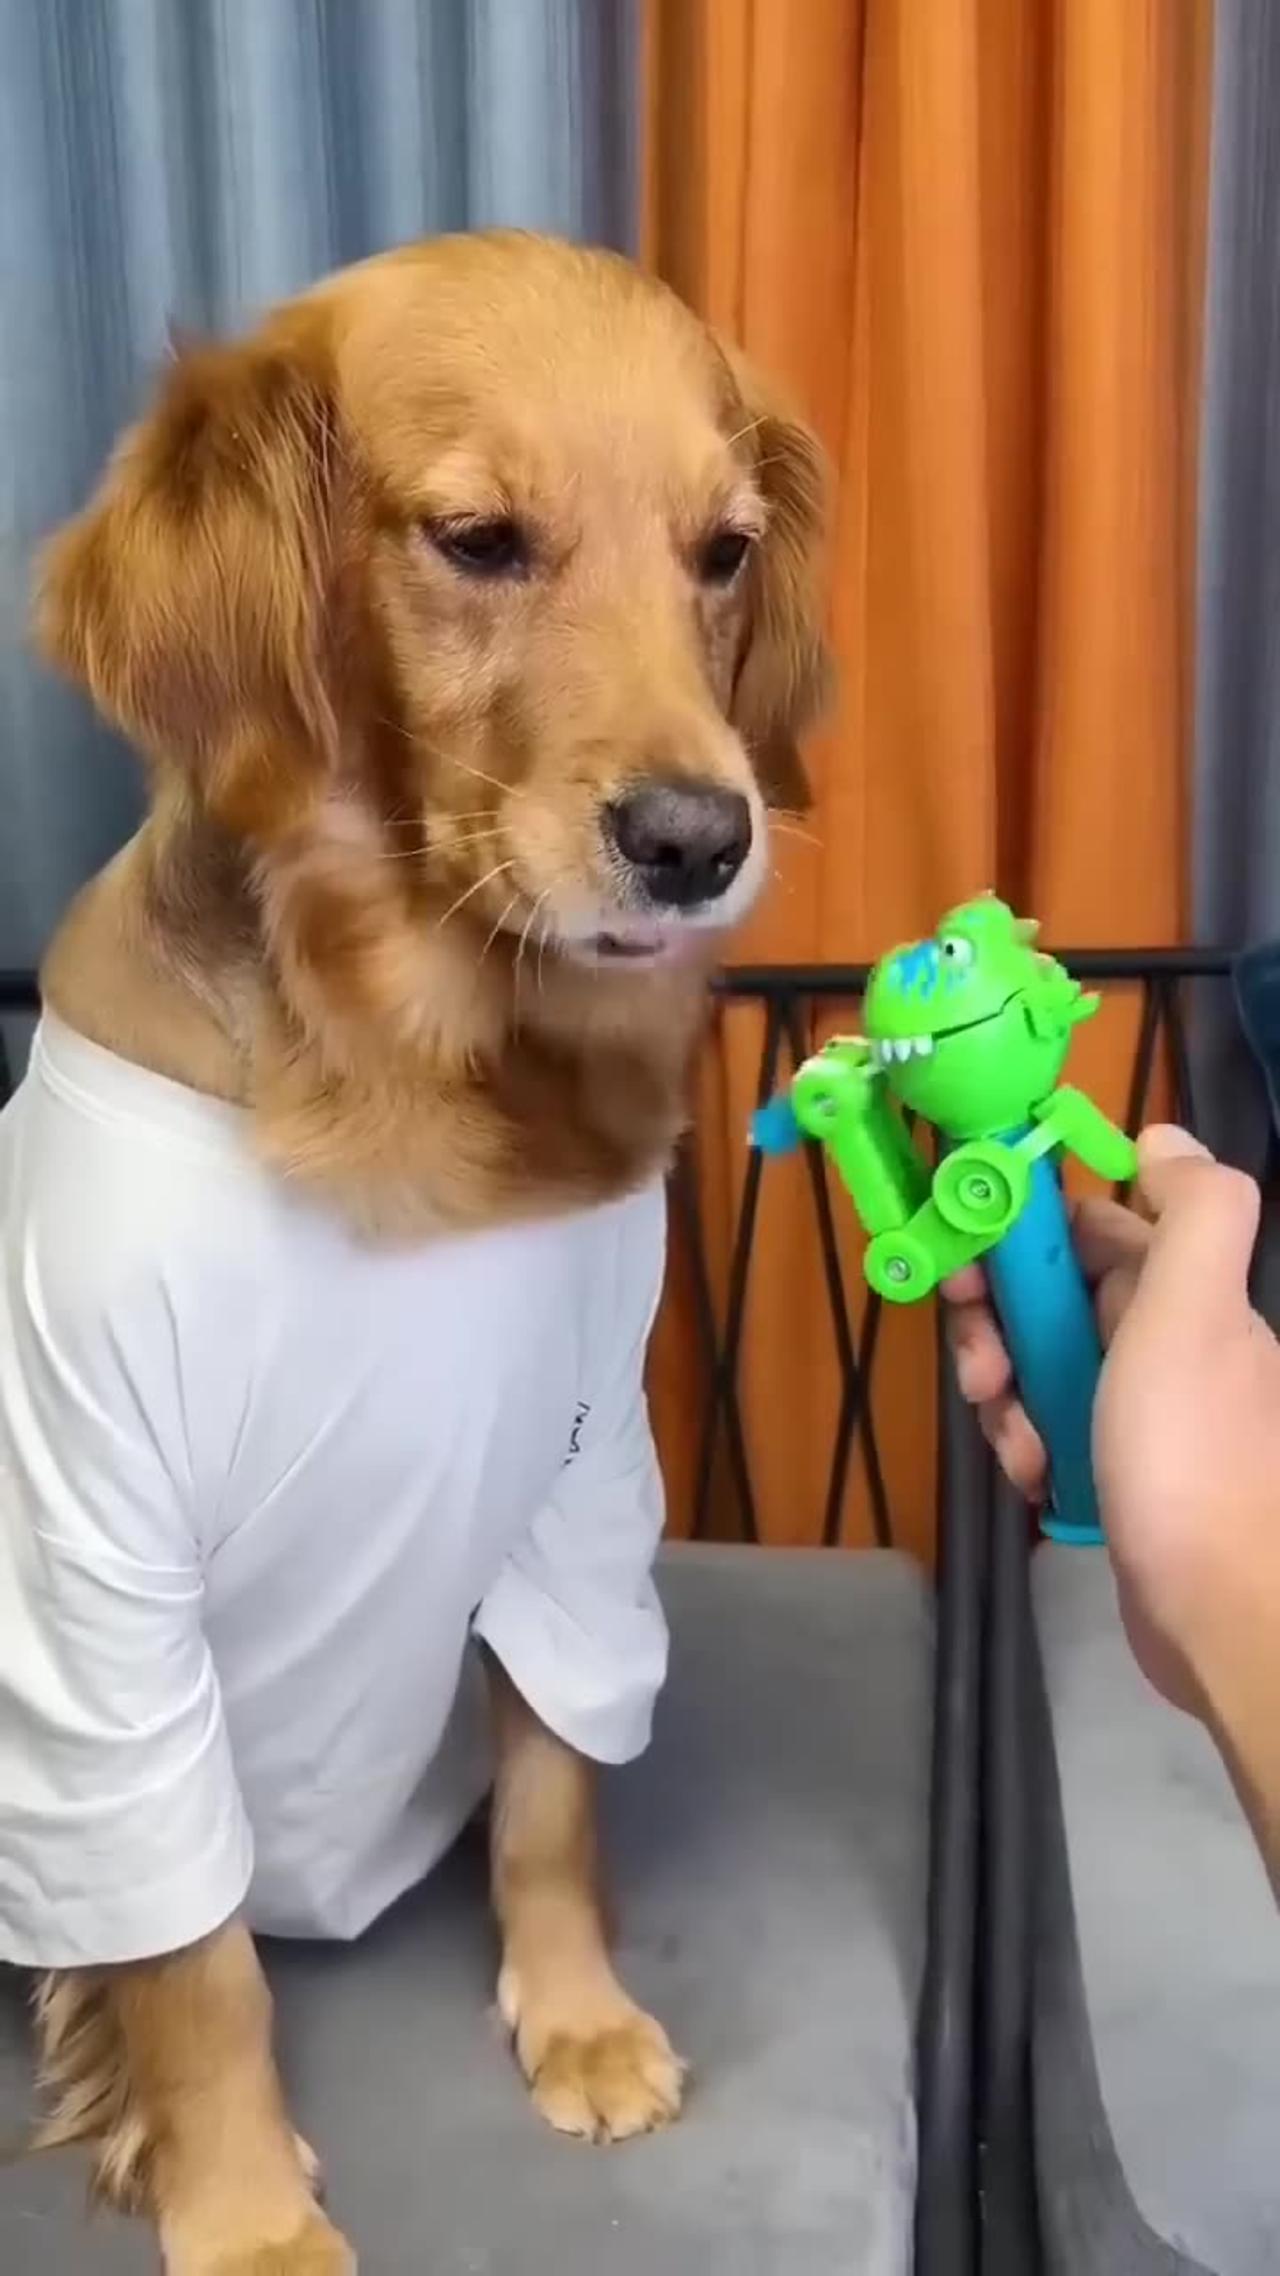 Cut dog video